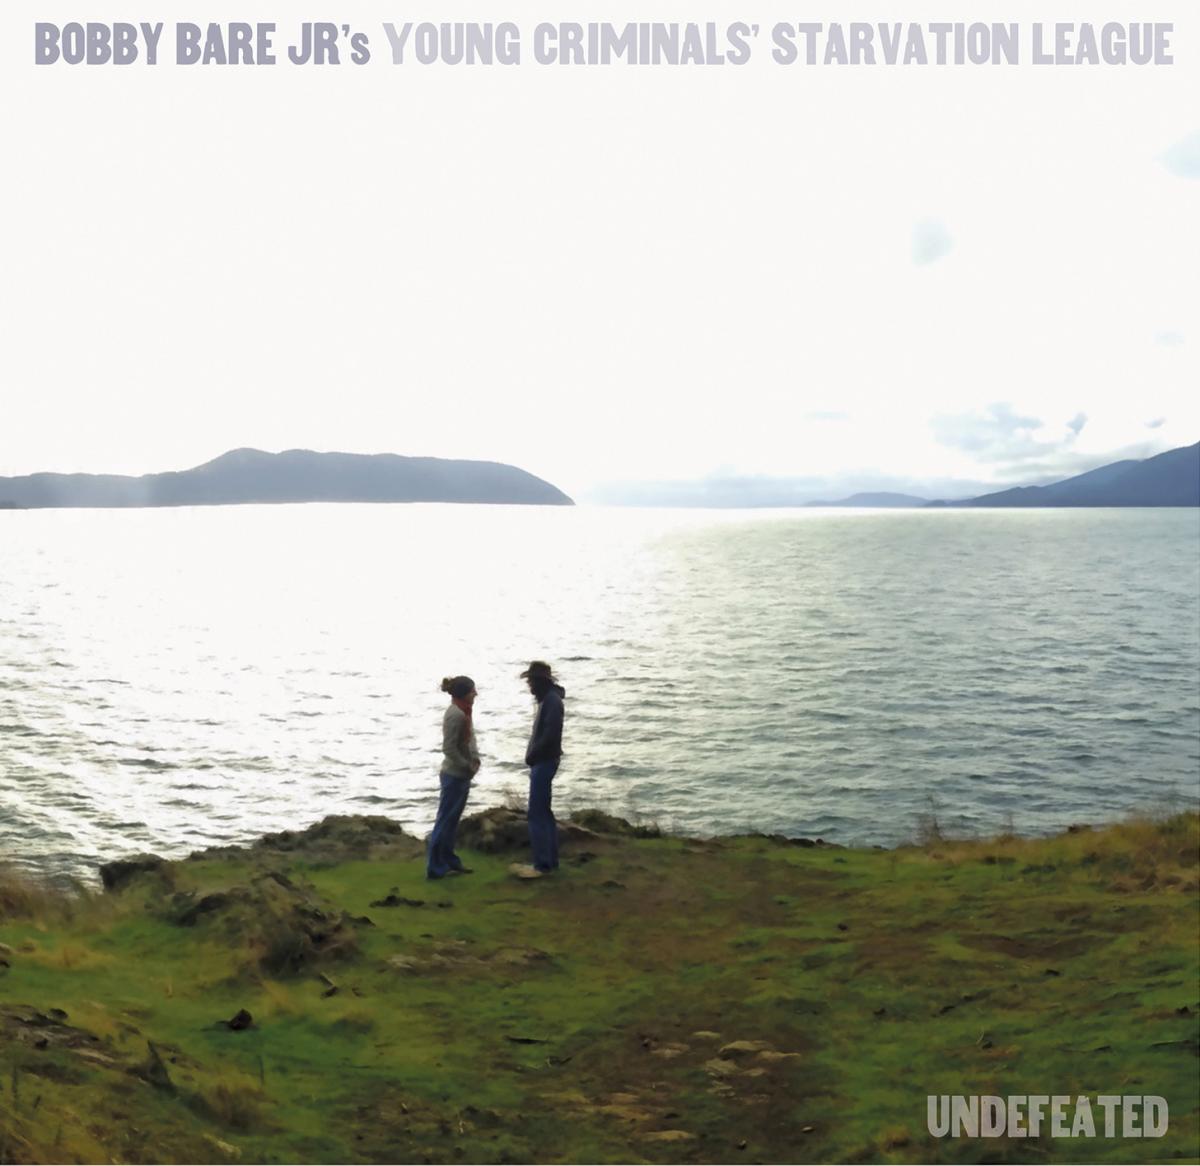 ¿Qué estáis escuchando ahora? - Página 6 03-12-Discs-Bobby-Bare-Jr.s-Young-Criminals-Starvation-League-Undefeated